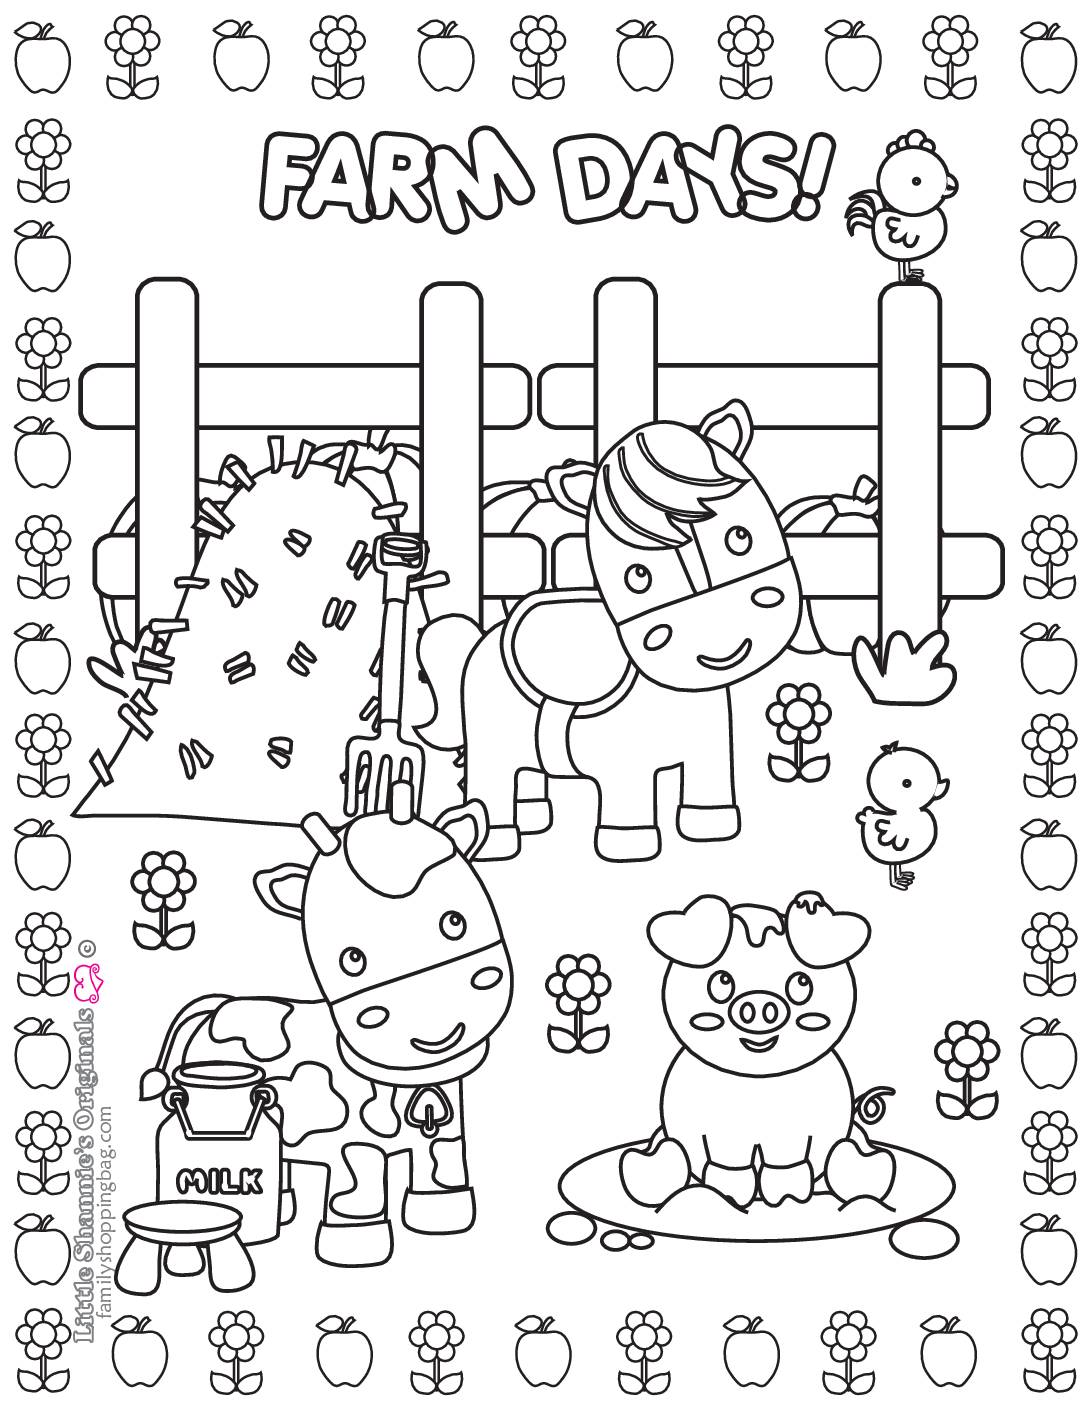 Coloring Page 5 Farm